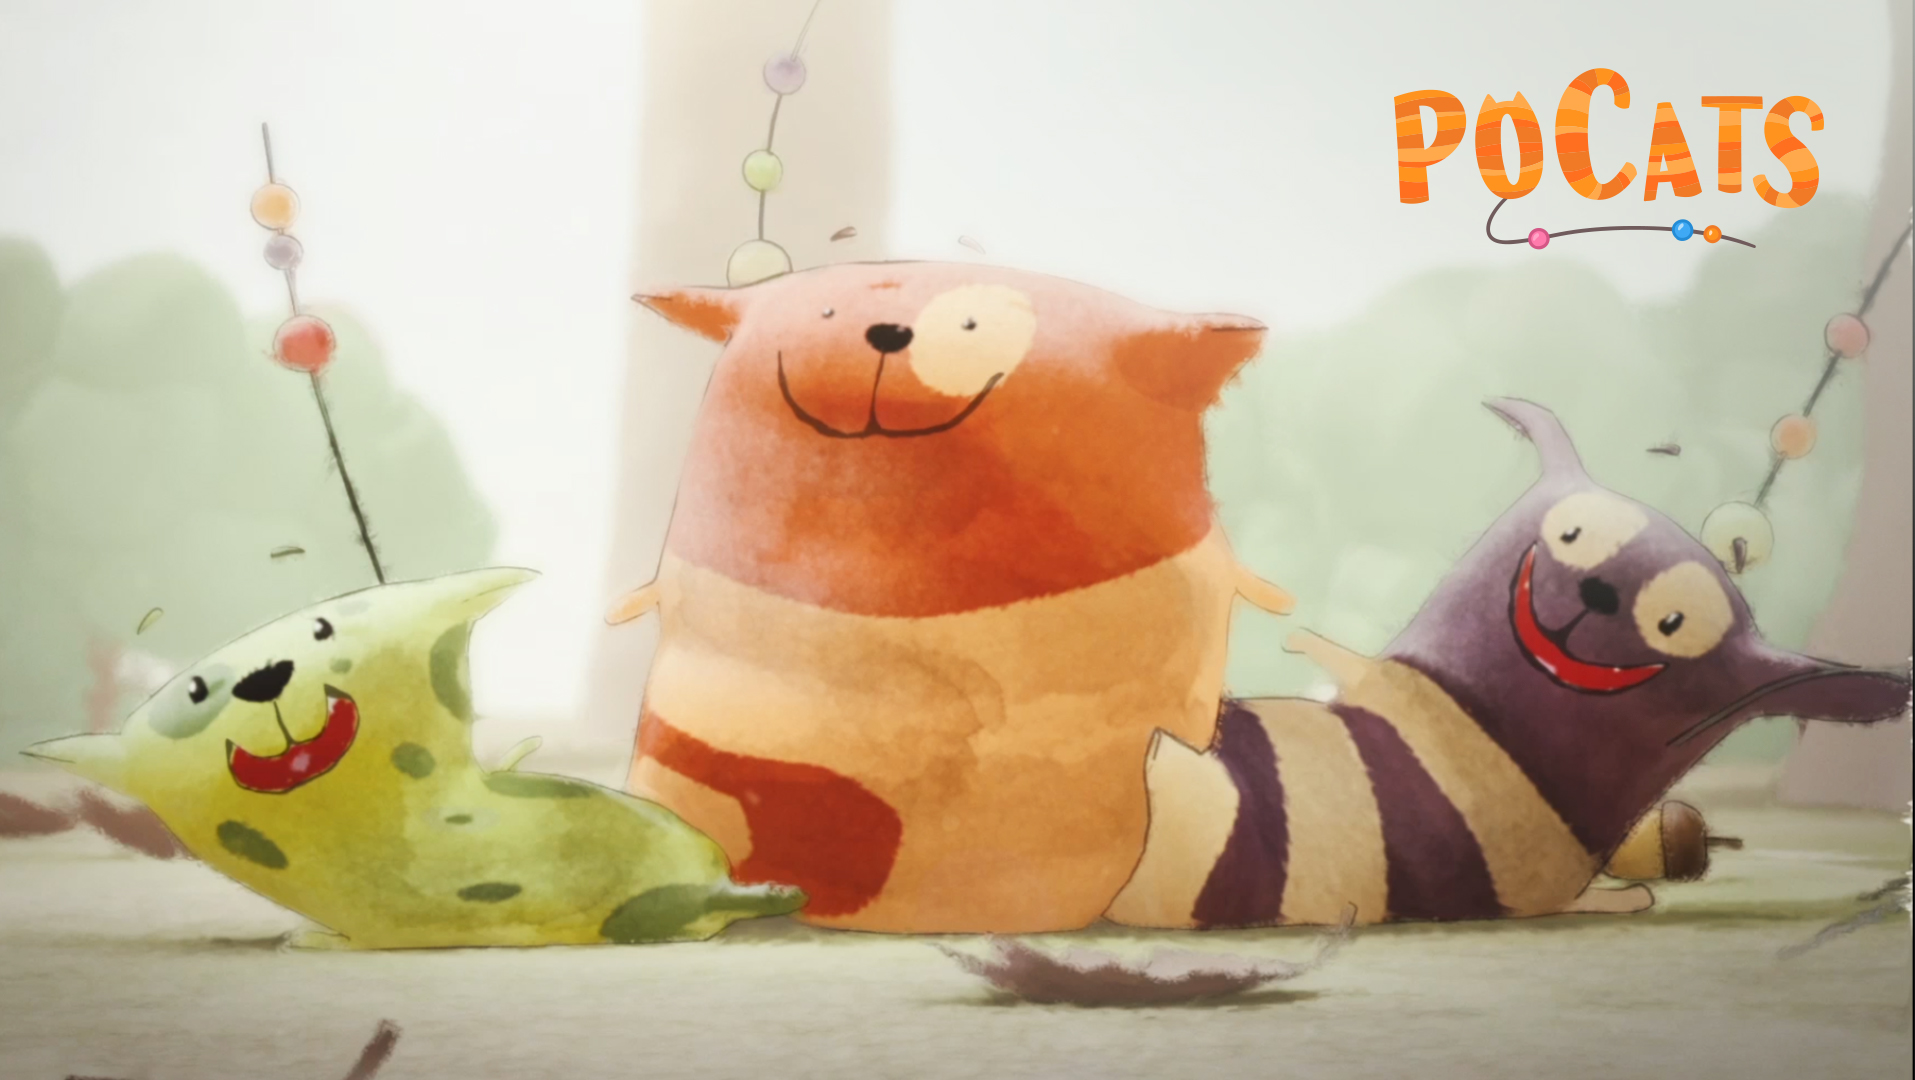 Pocats - Animation Series